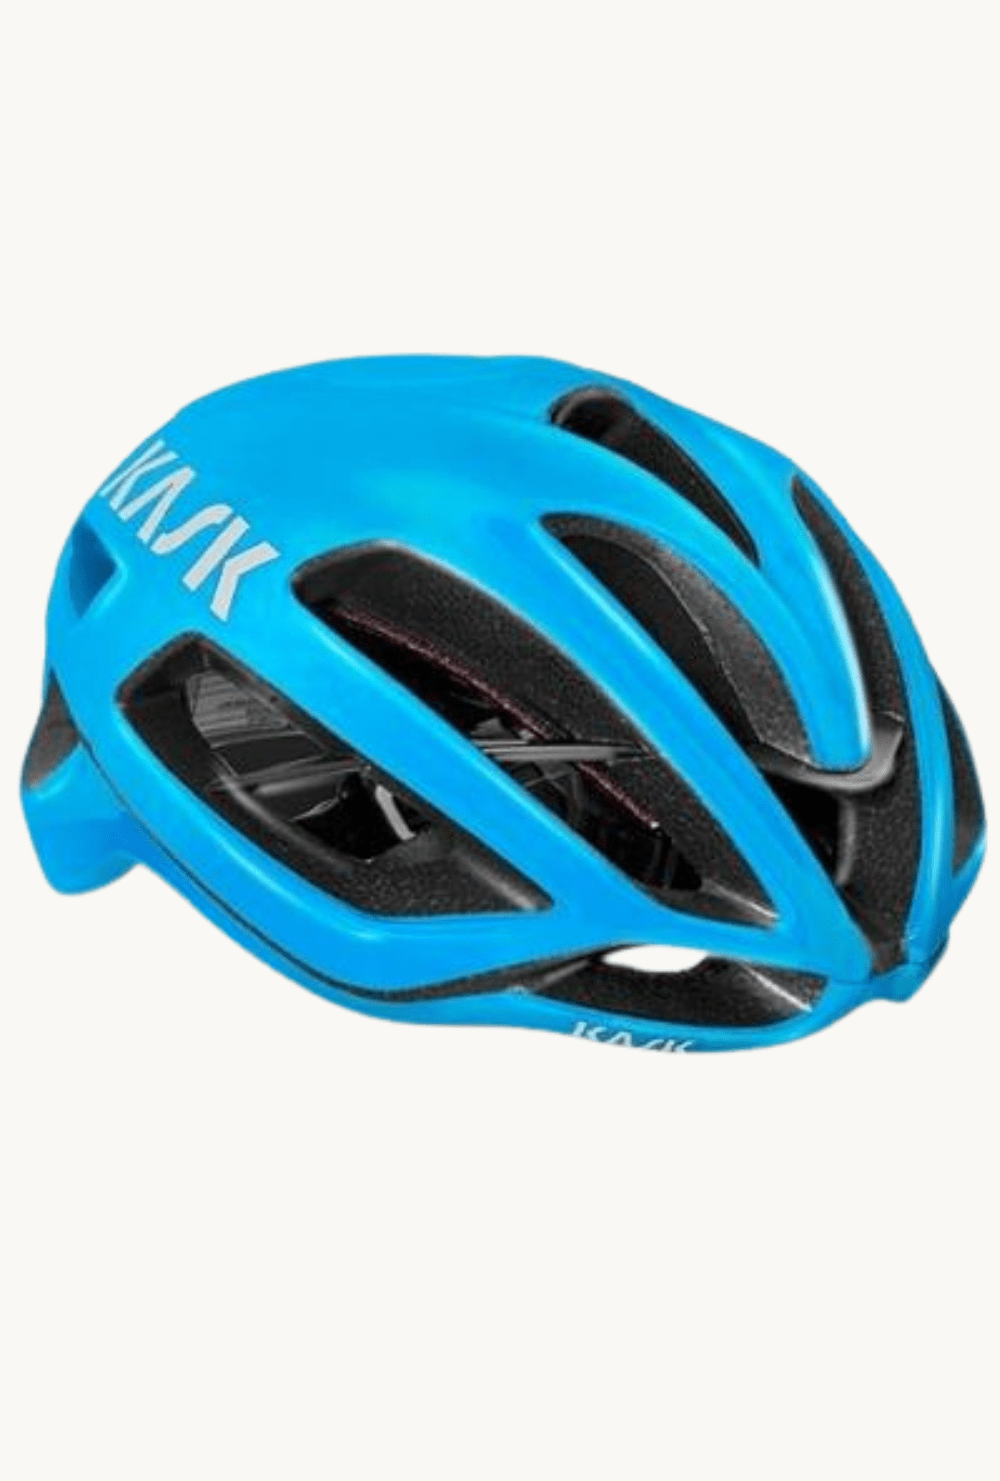 Helmet - Kask Protone Sky Bluesmall (50-56cm) / Sky Blue